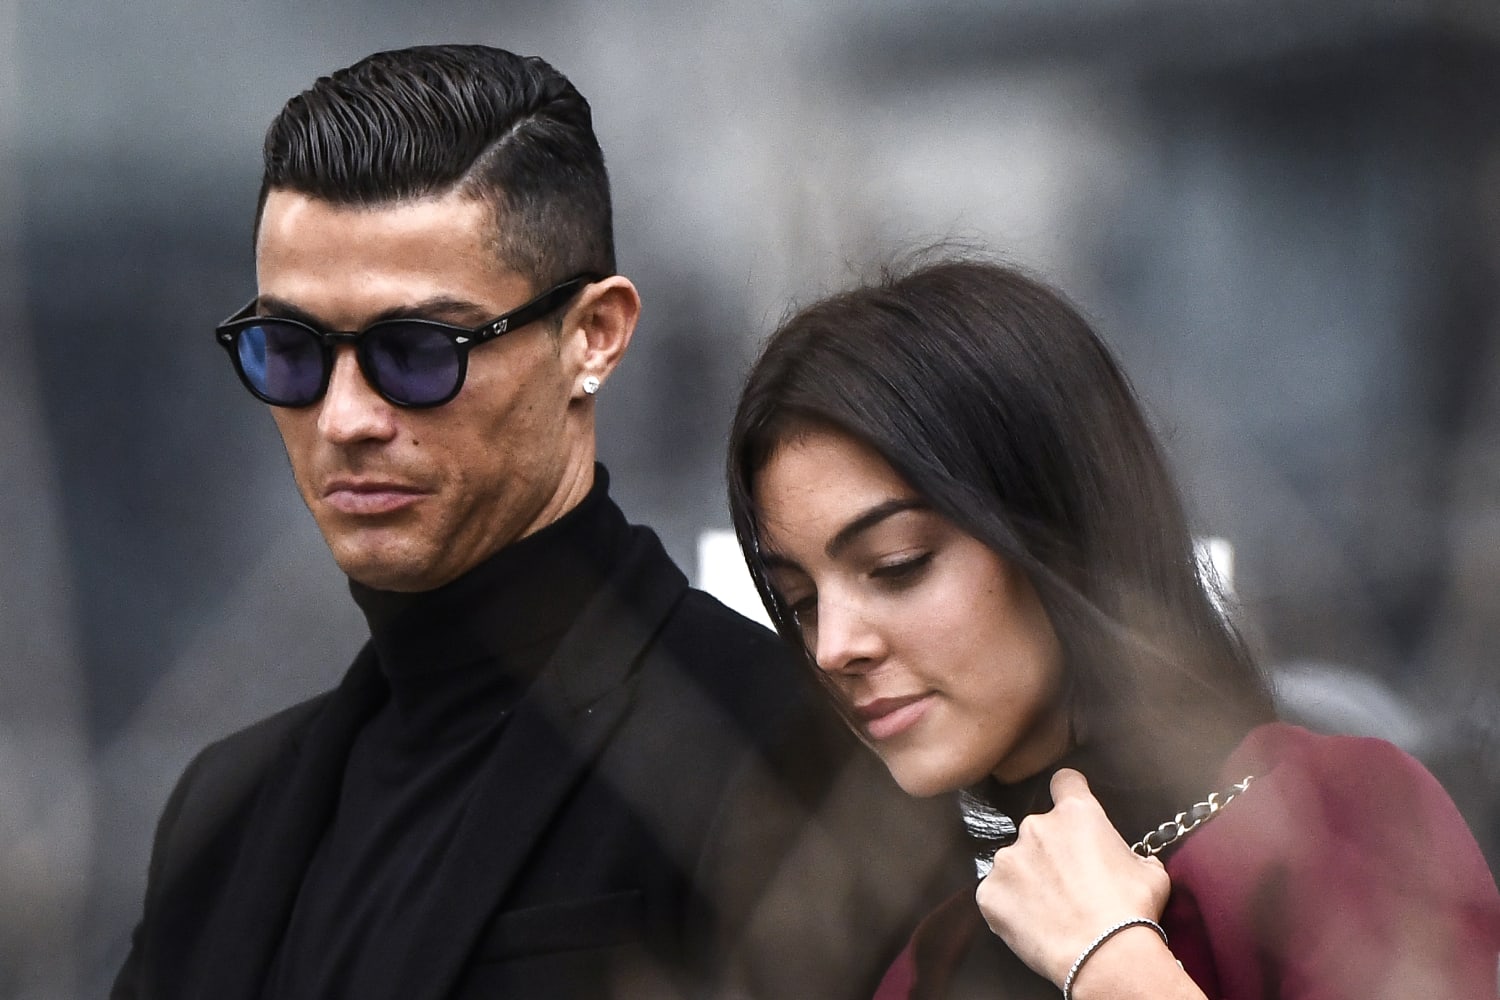 Cristiano Ronaldo says his baby boy has died